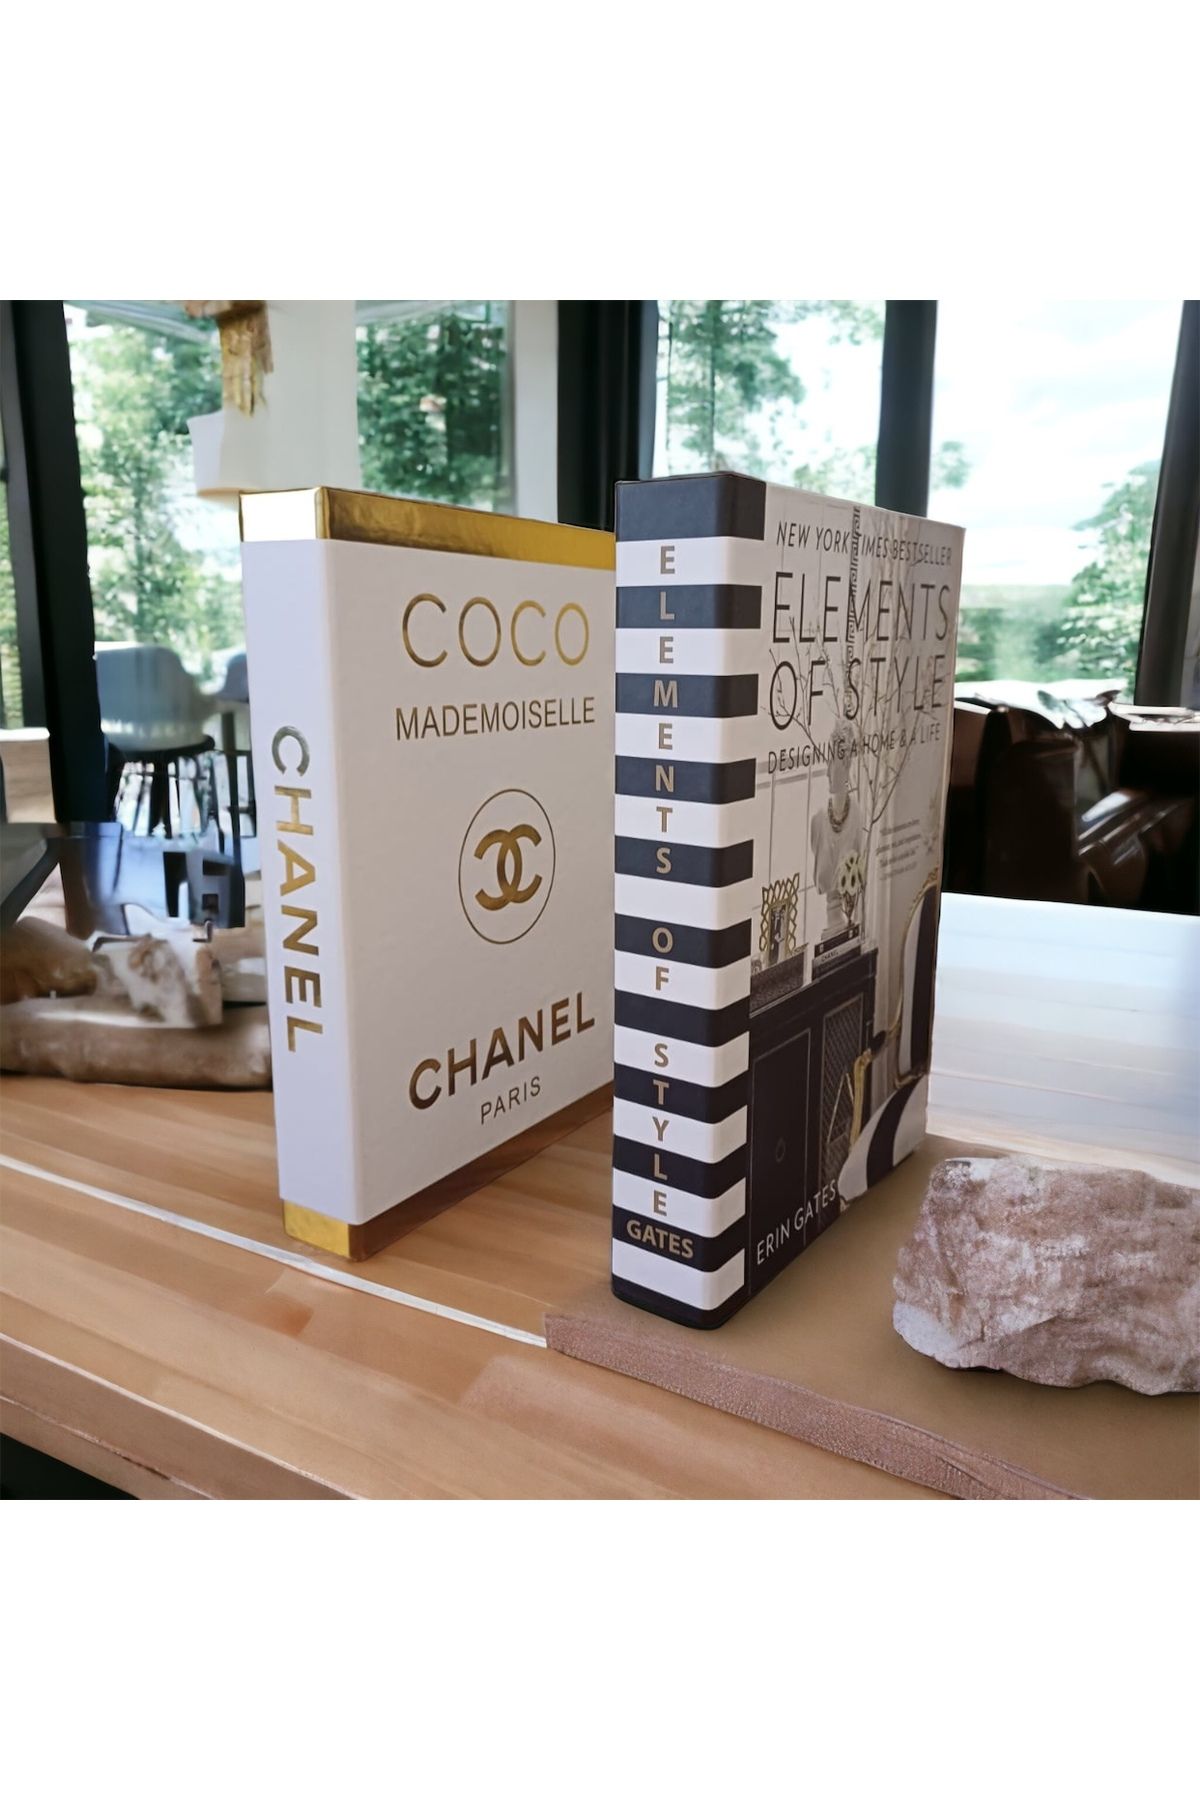 NARİBA Elements & Chanel Coco Dekoratif Kitap Kutusu 2’li Set